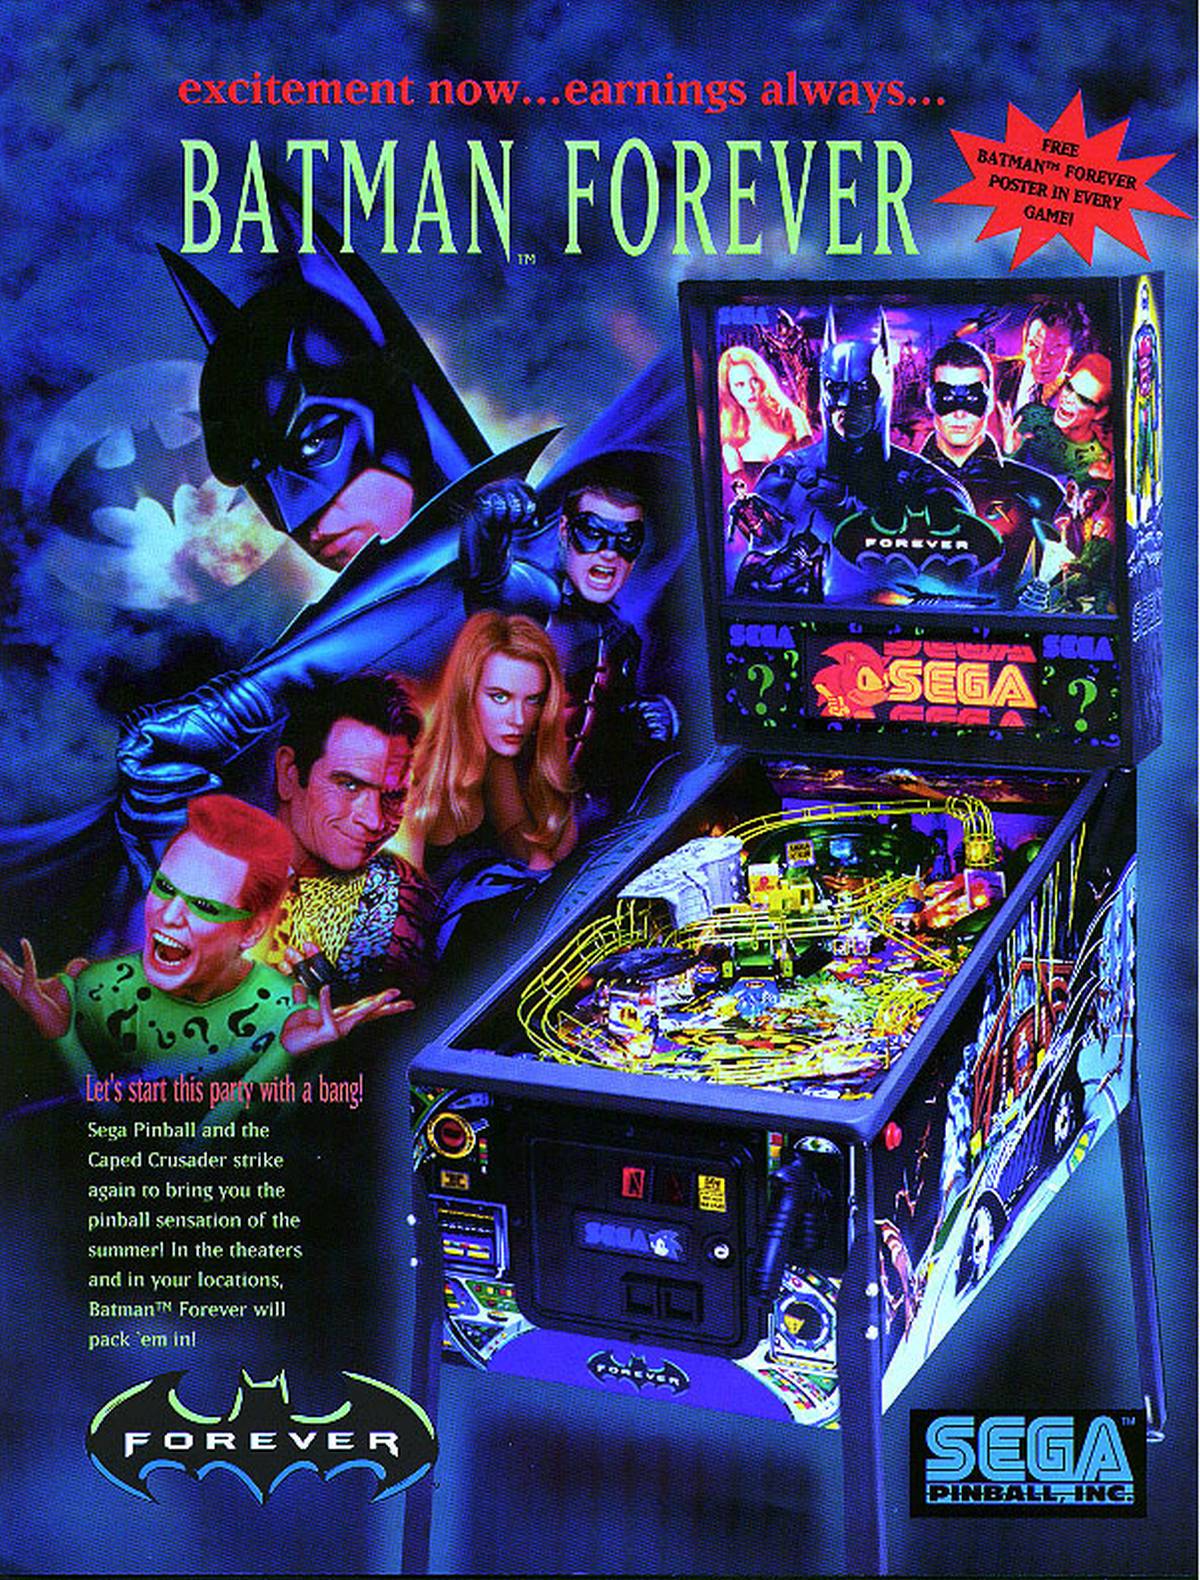 Batman forever sega. Игра Sega: Batman Forever. Бэтмен Форевер игра сега. Пинбол Sega. Бэтмен навсегда игра сега.